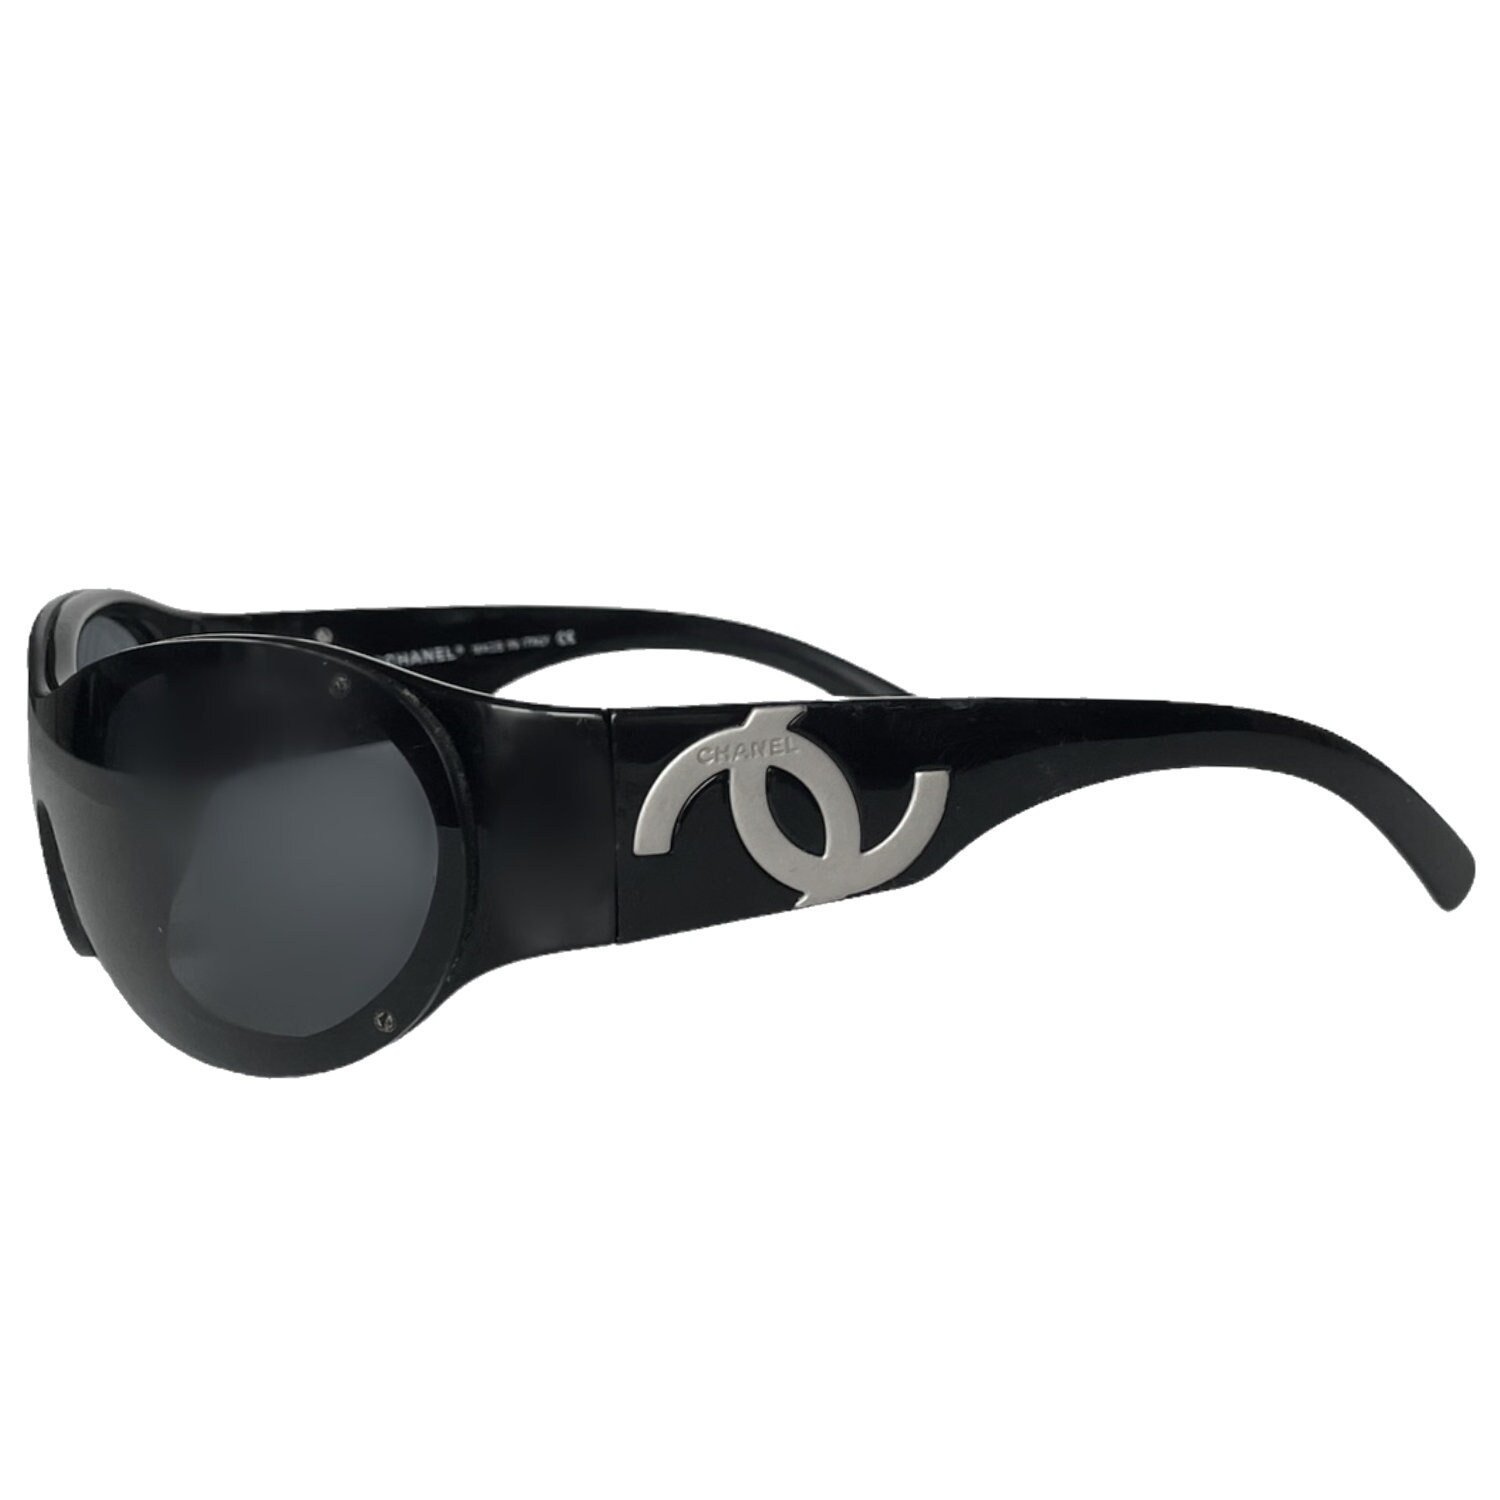 Chanel Sunglasses Authentic Chanel Logo Wraparound - Etsy